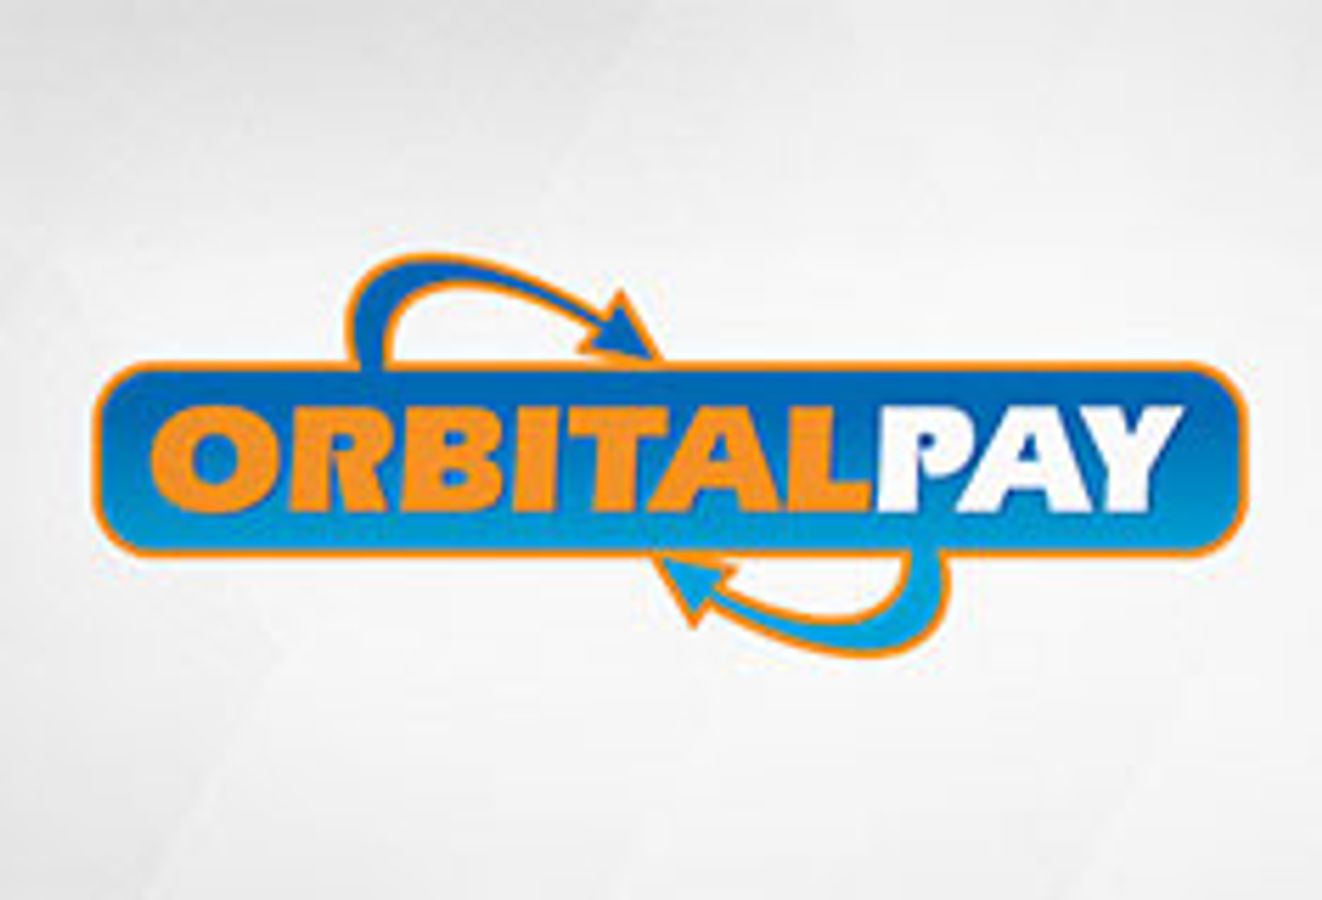 Orbital Pay